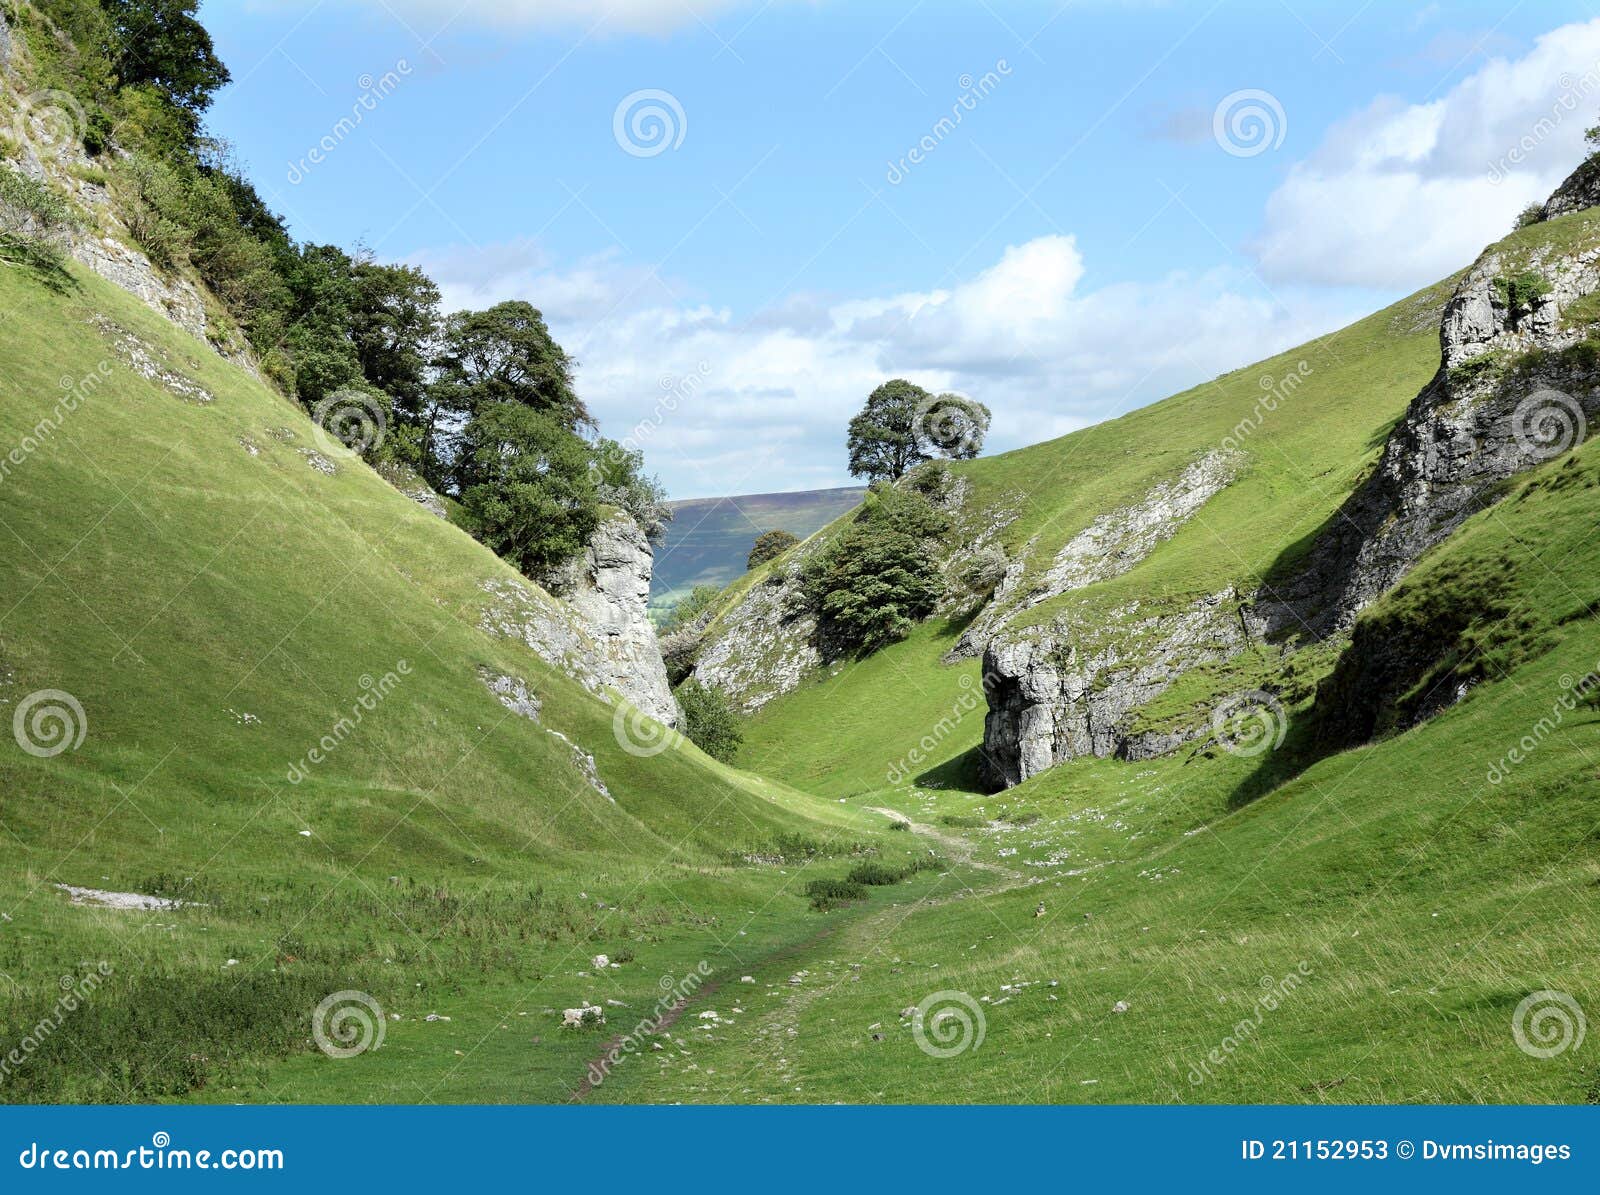 limestone valley